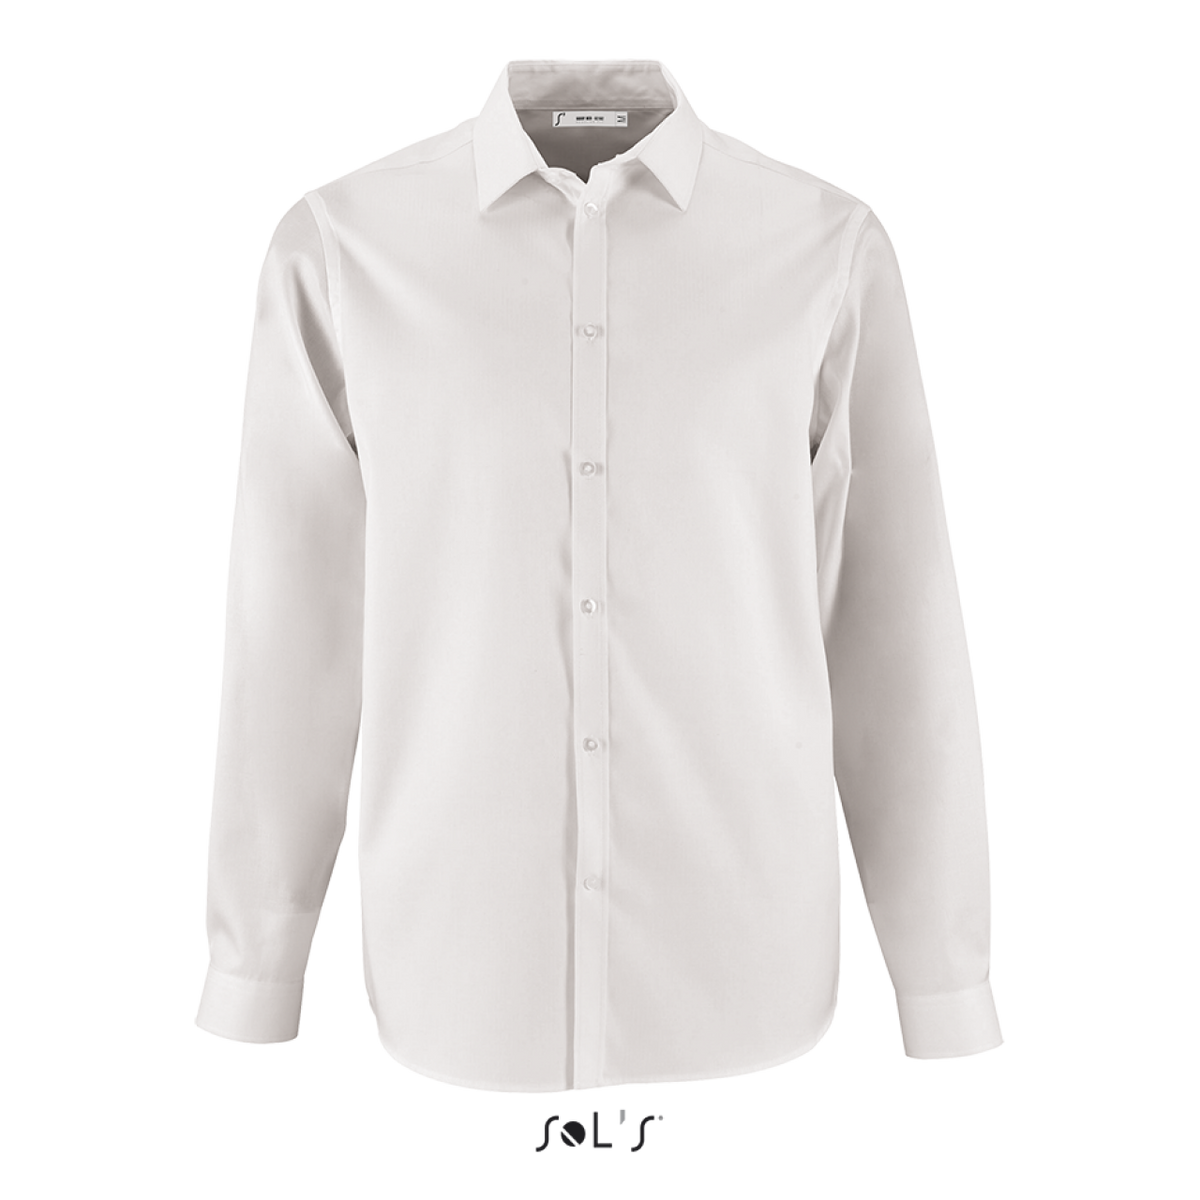 SOL'S Herren Hemd Herringbone Arbeitskleidung Shirt Langarm Anzug